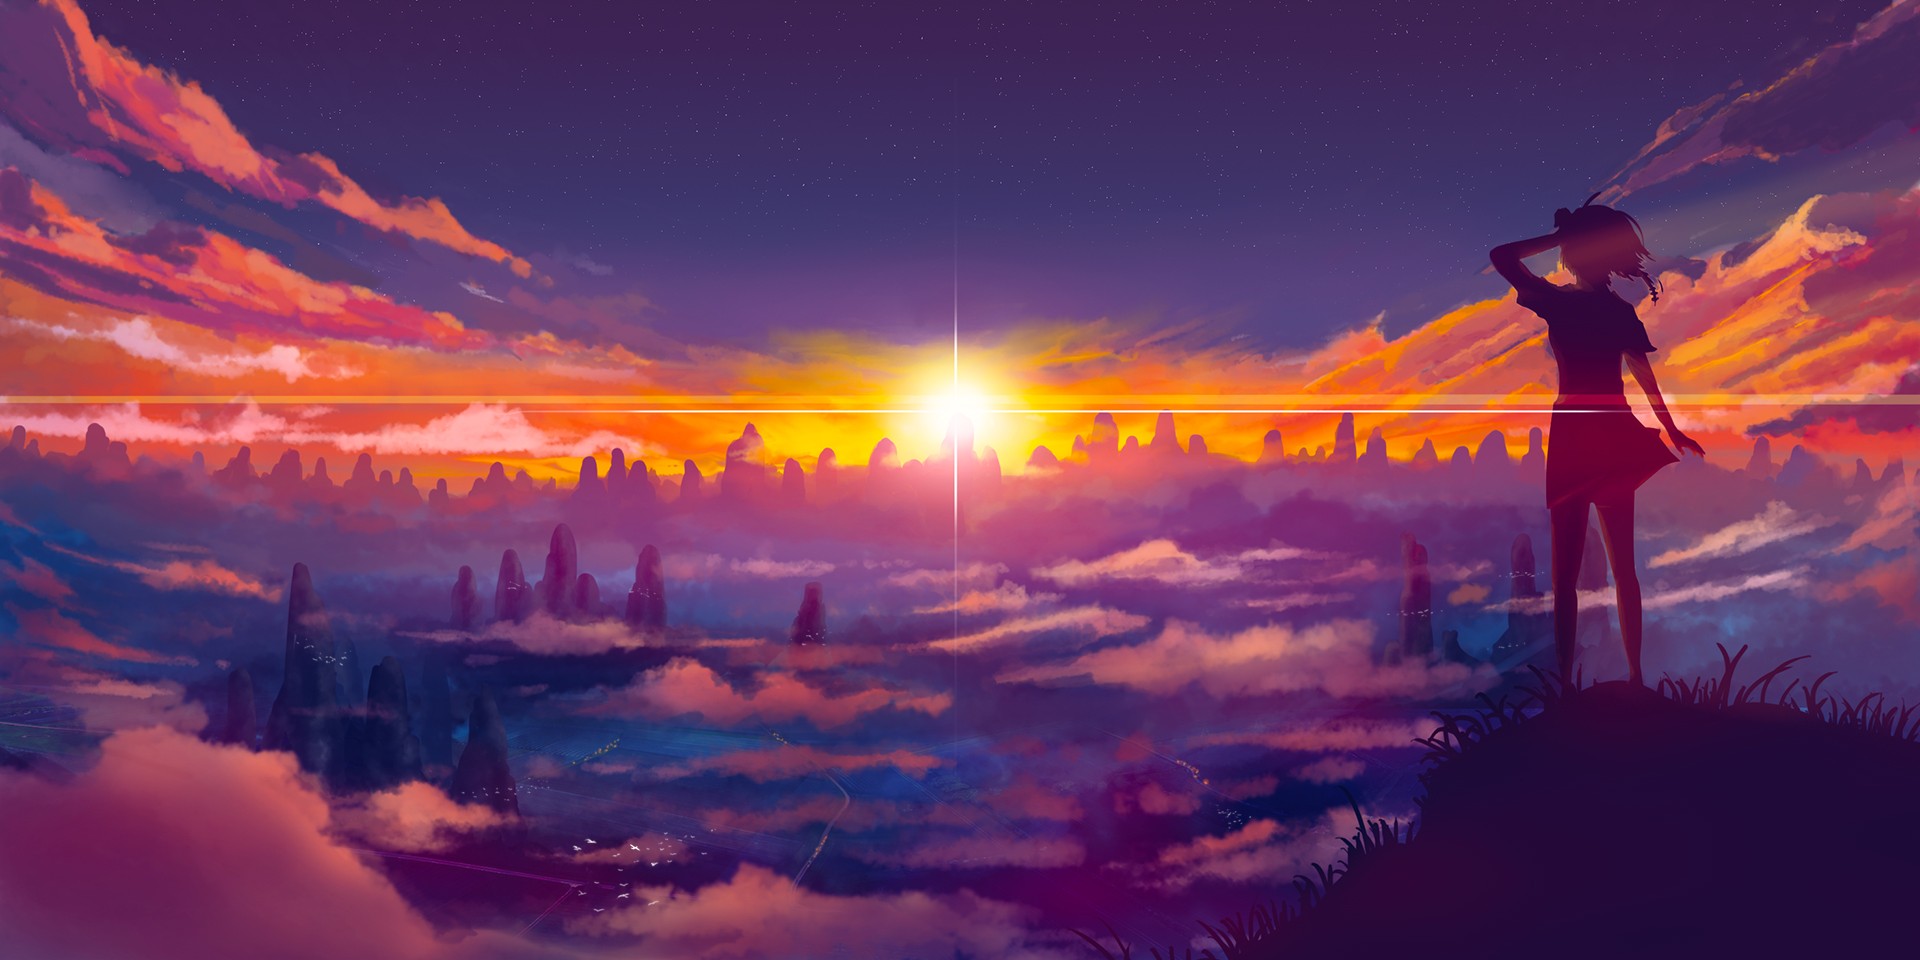 Anime 1920x960 sunset landscape anime girls DeviantArt sky anime Sun clouds standing women outdoors silhouette sunset glow